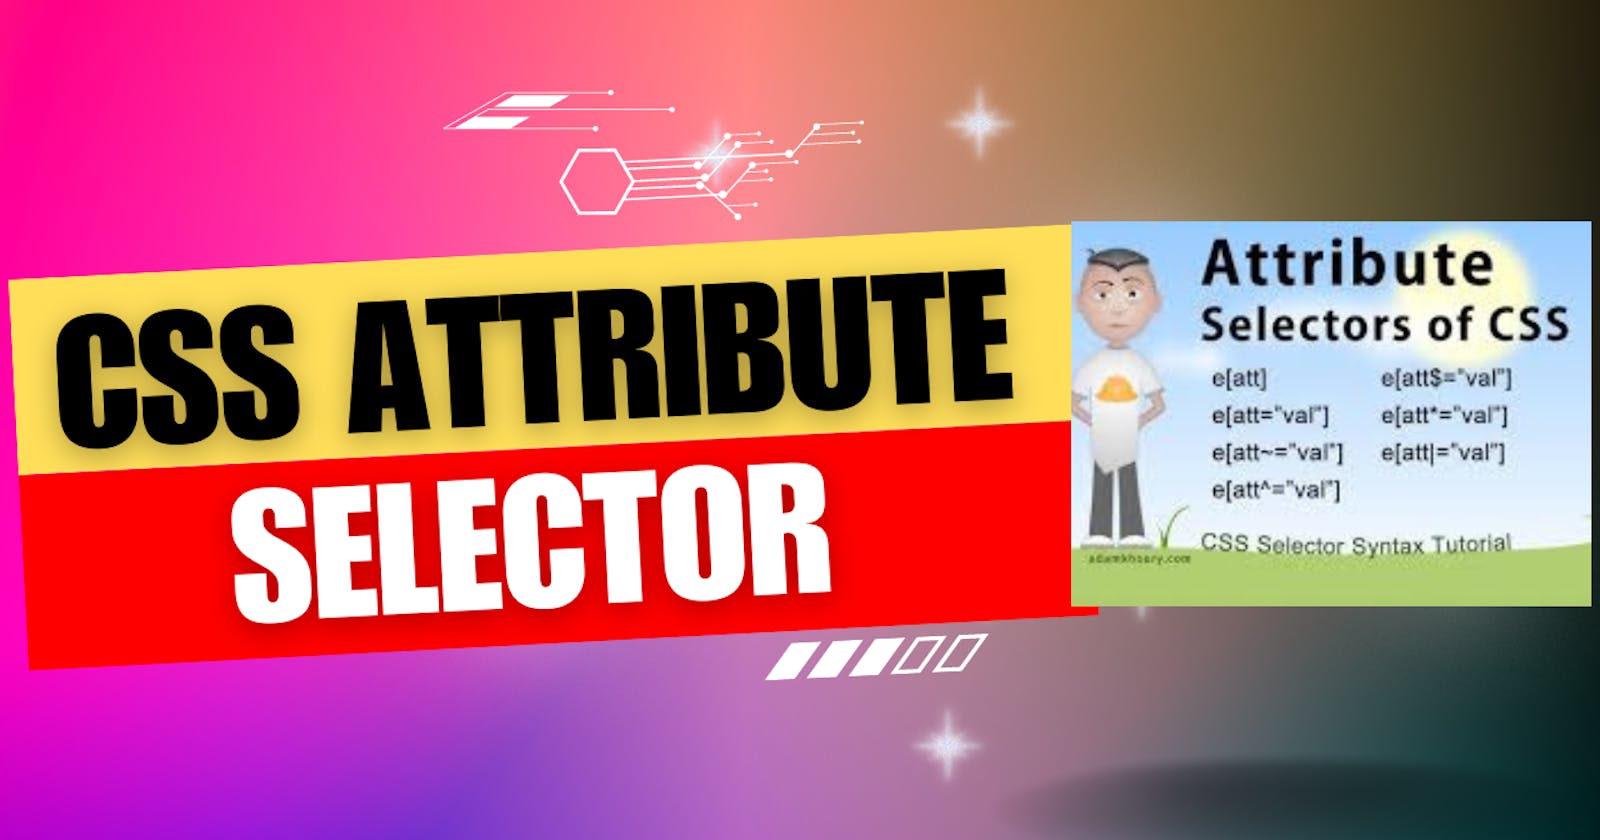 CSS Attribute Selector